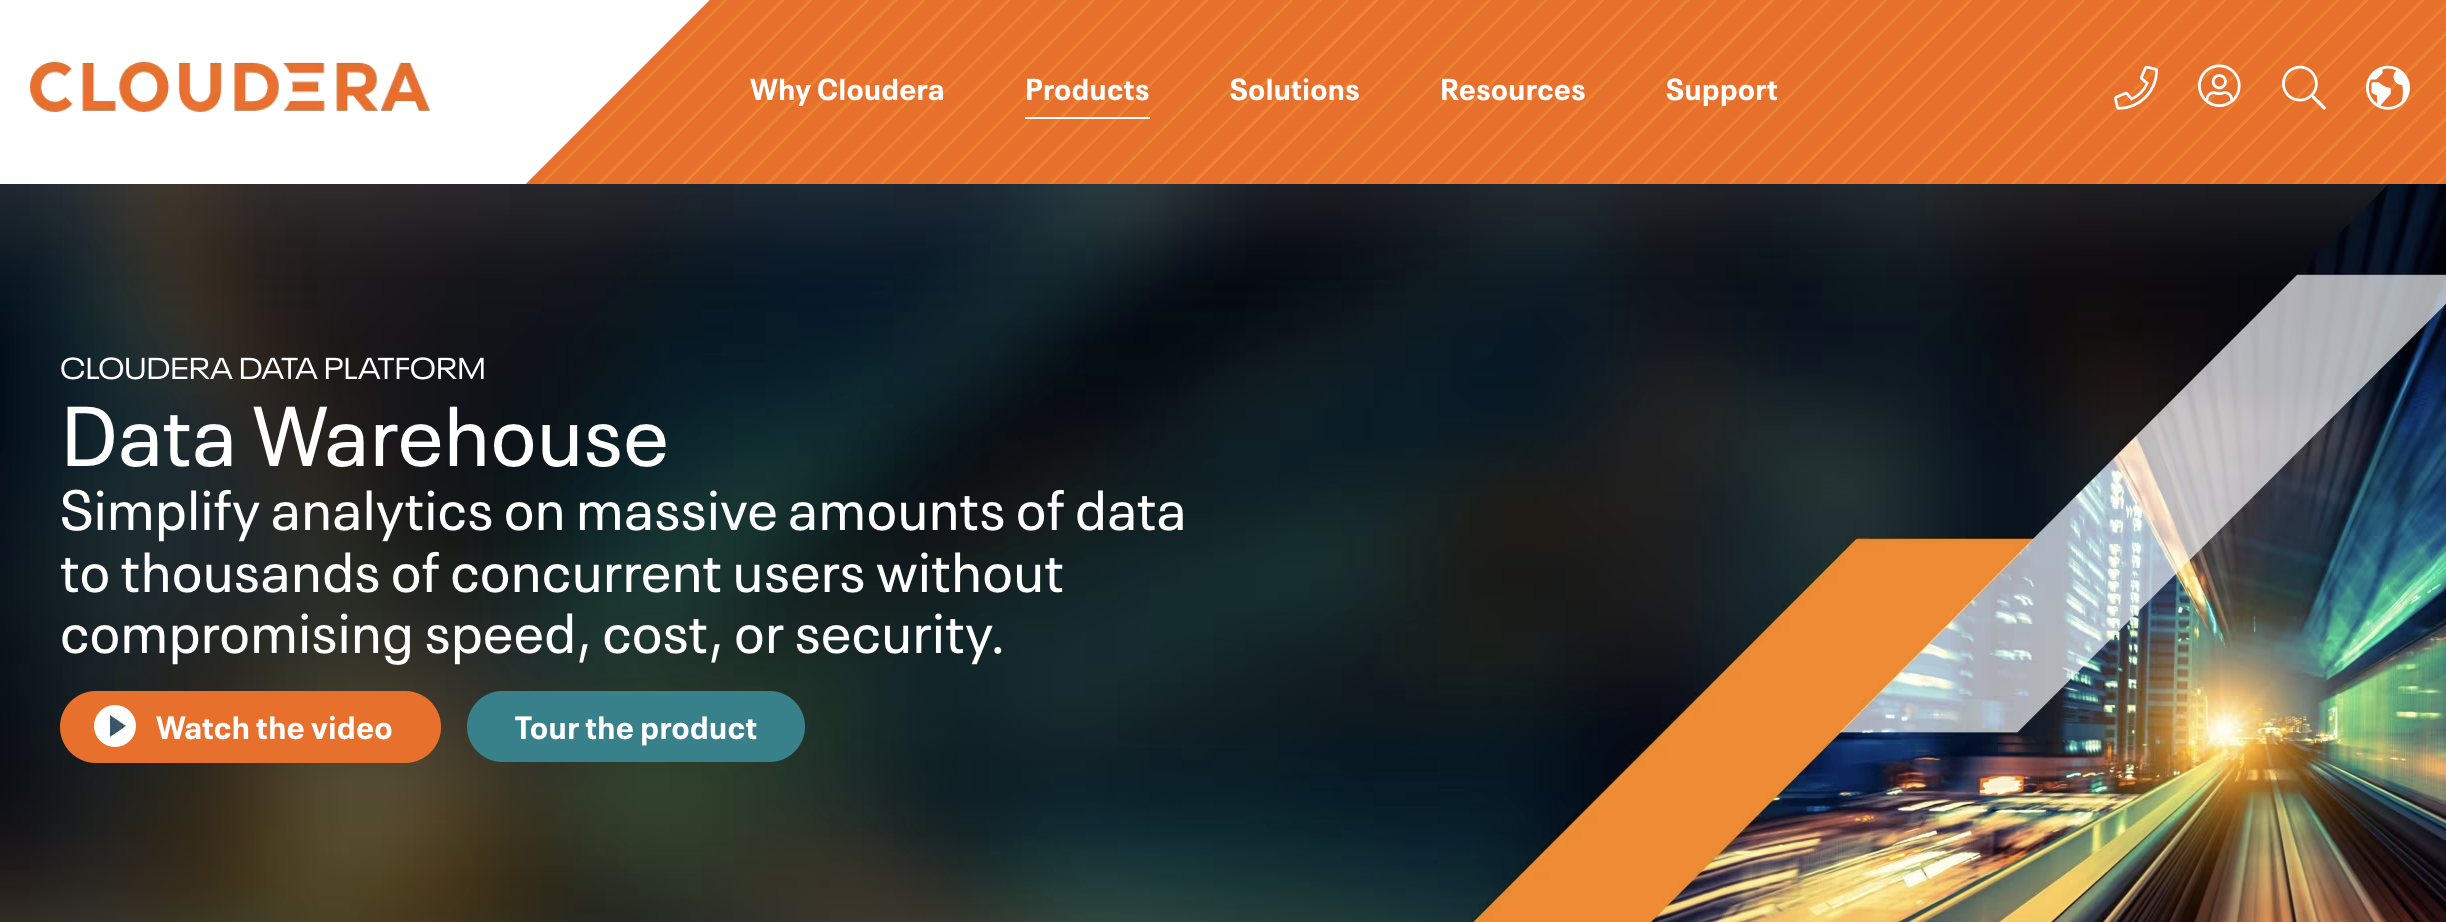 Cloudera - Data Warehouse